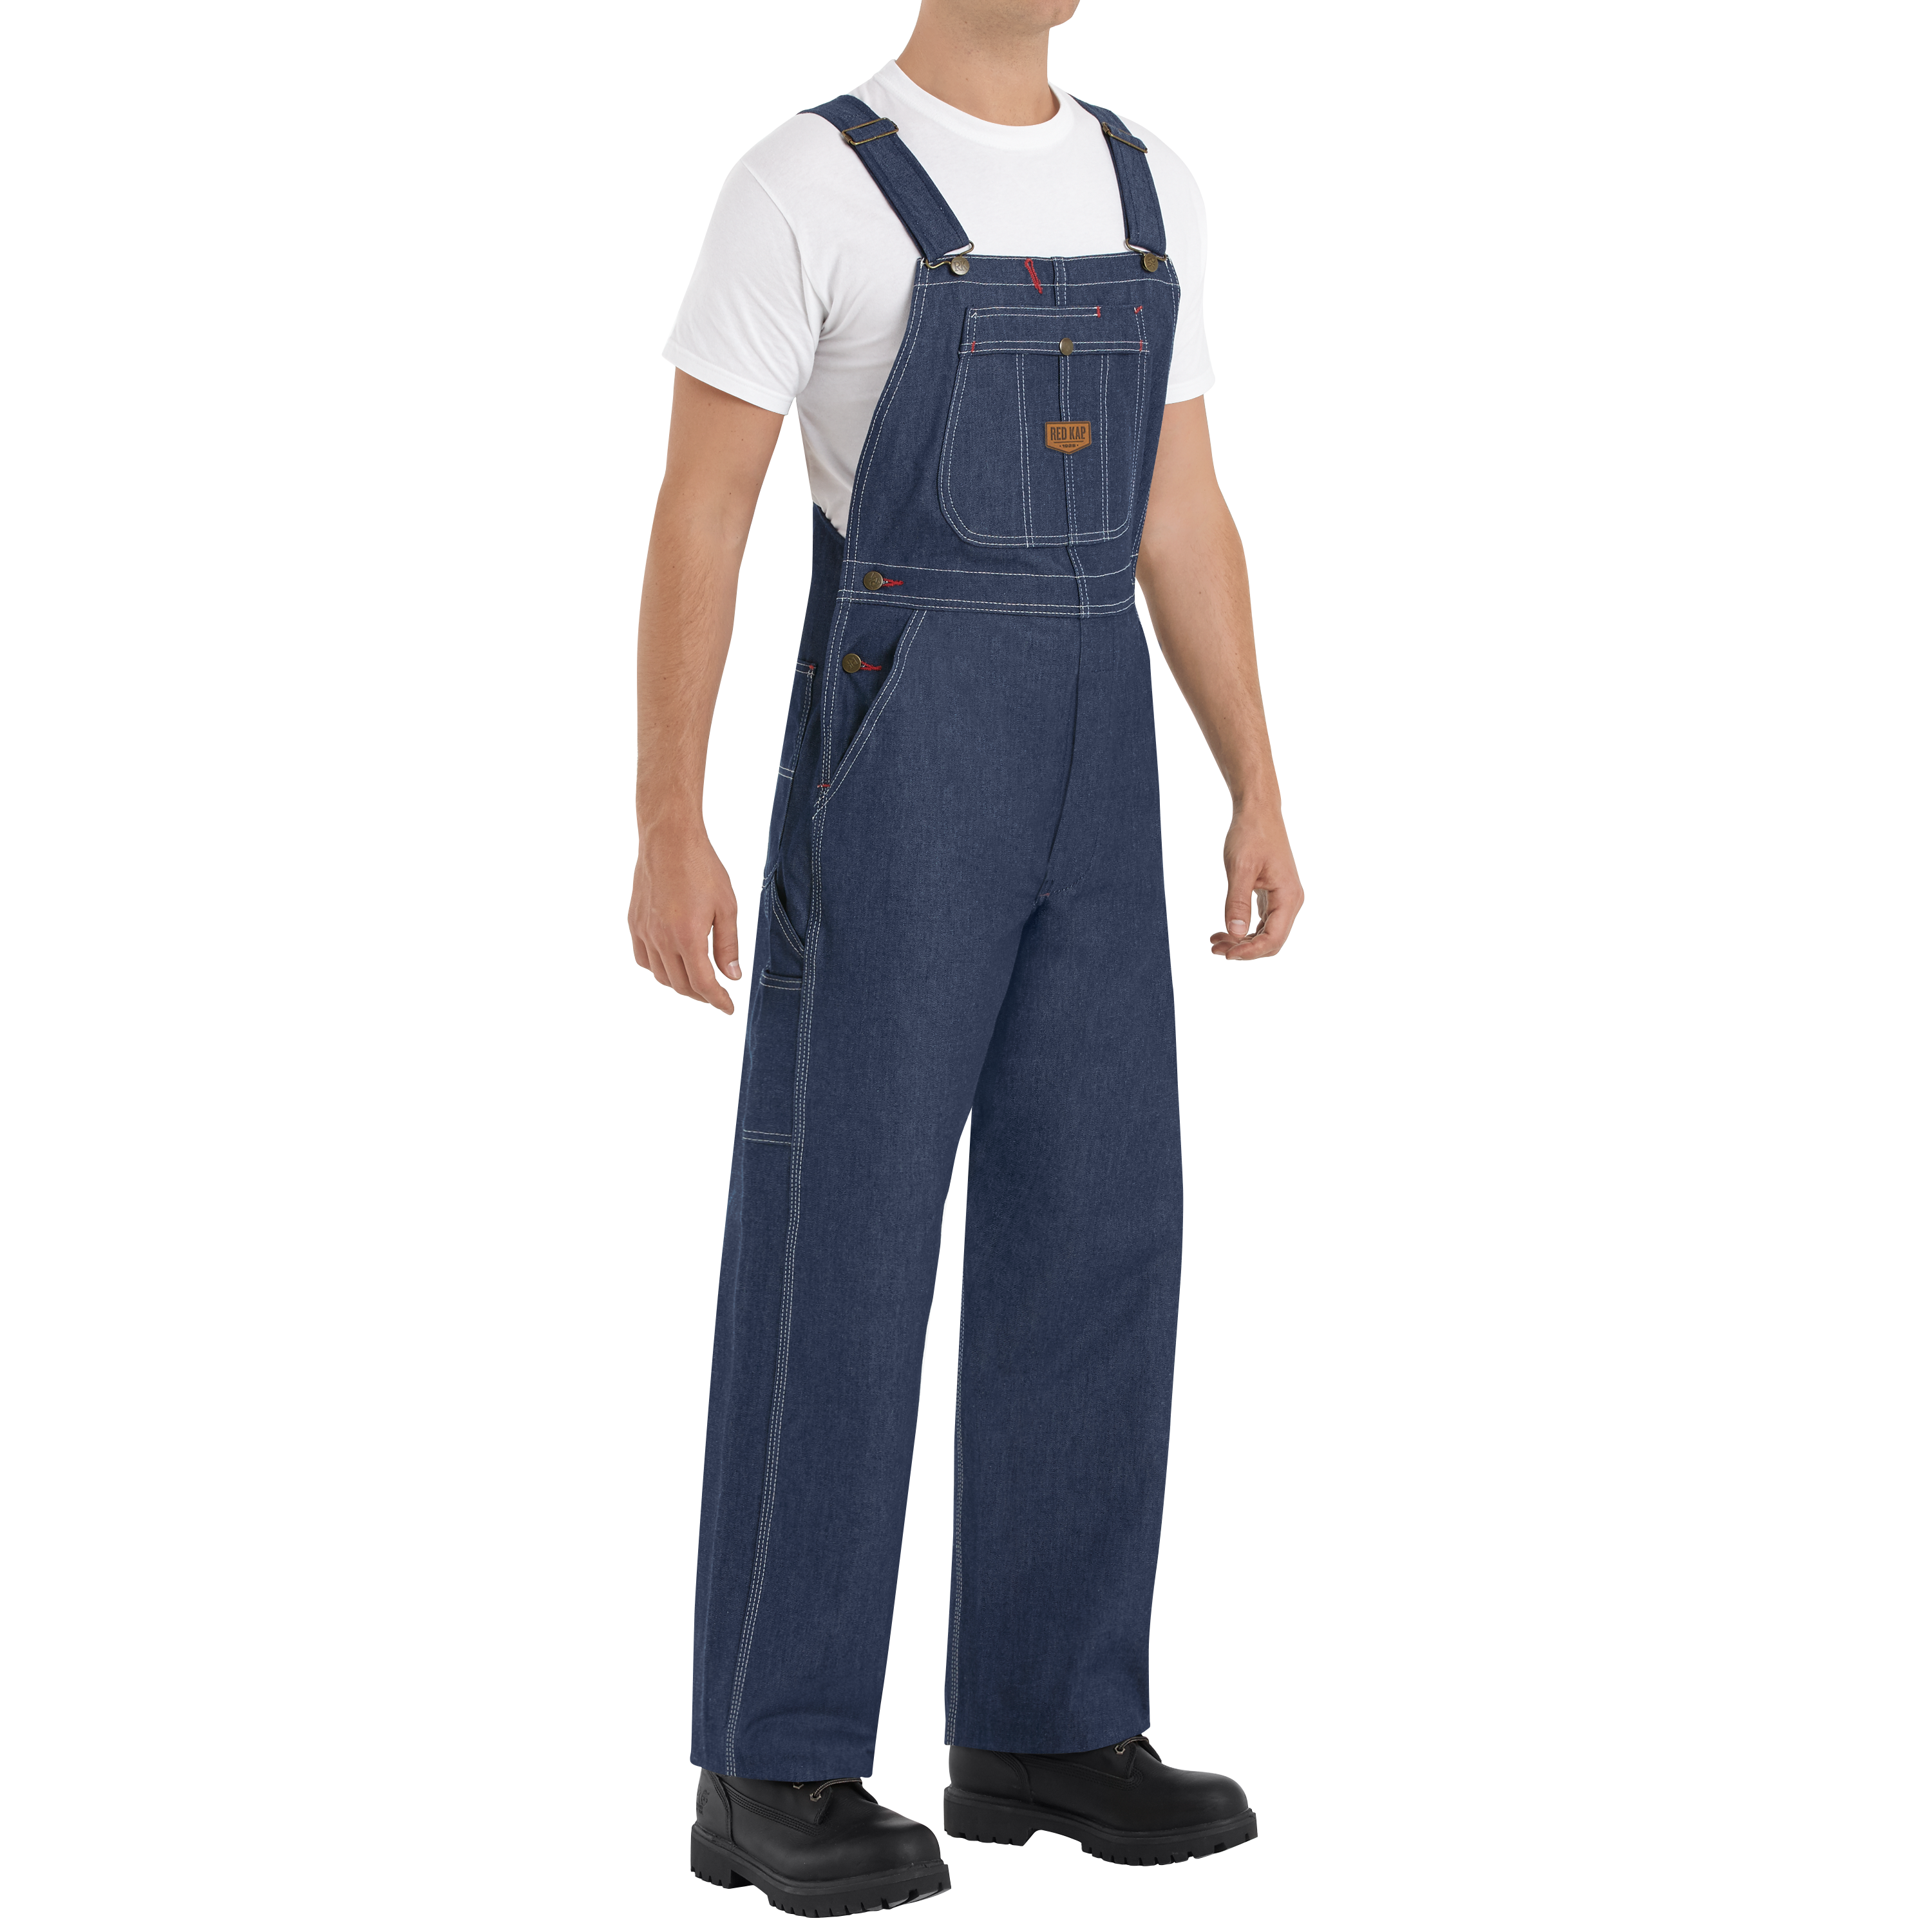 Men's Denim Dungarees Jeans Bib and Brace Overall Pro Heavy Duty Workwear  Pants | eBay